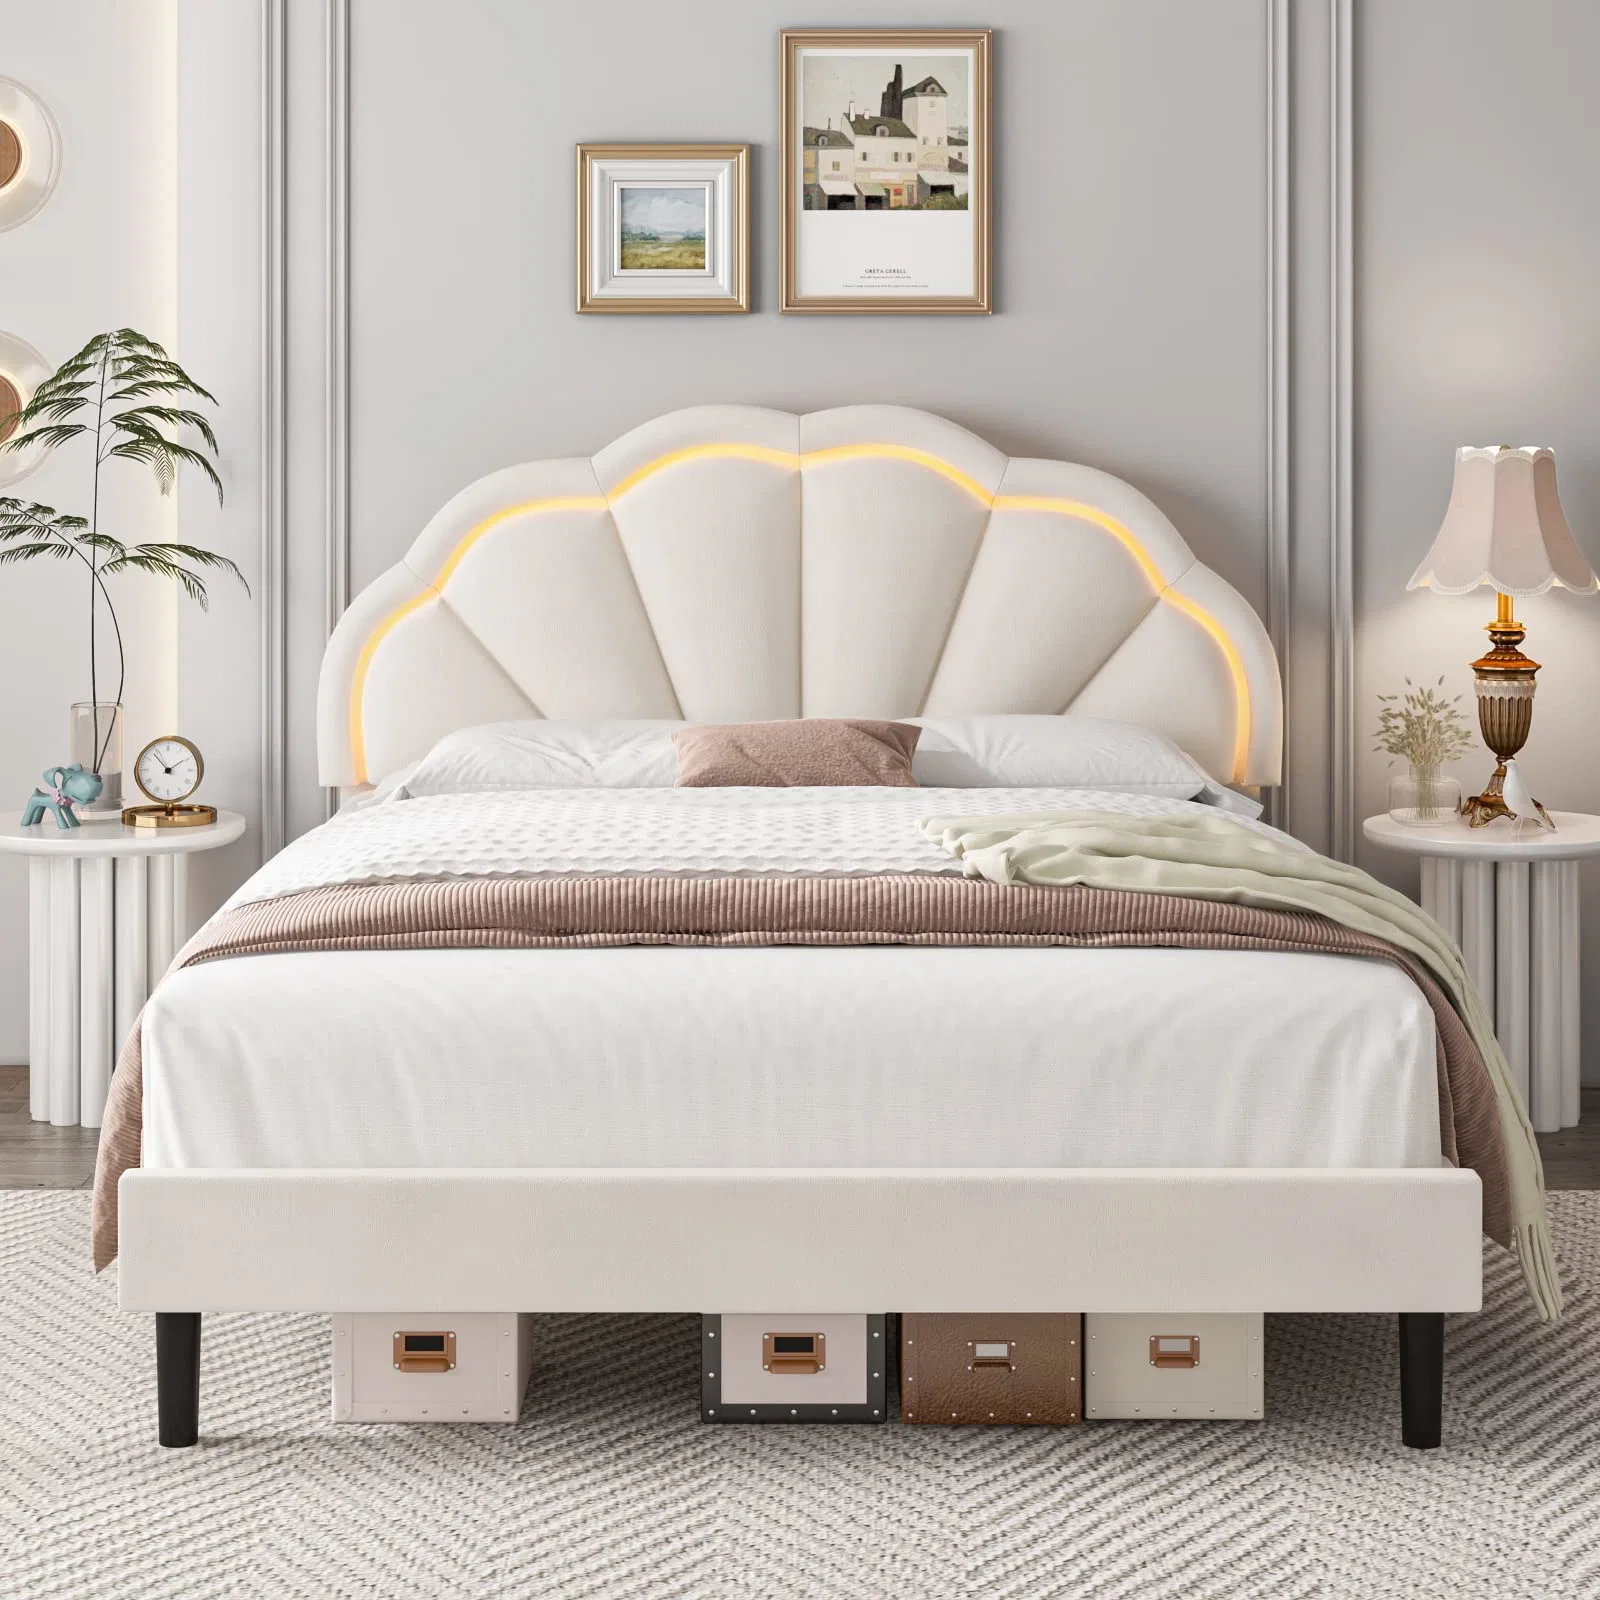 Upholstered Smart LED Bed Frame with Adjustable Elegant Flowers Headboard, Platform Bed Frame Queen Size with Wooden Slats Support White